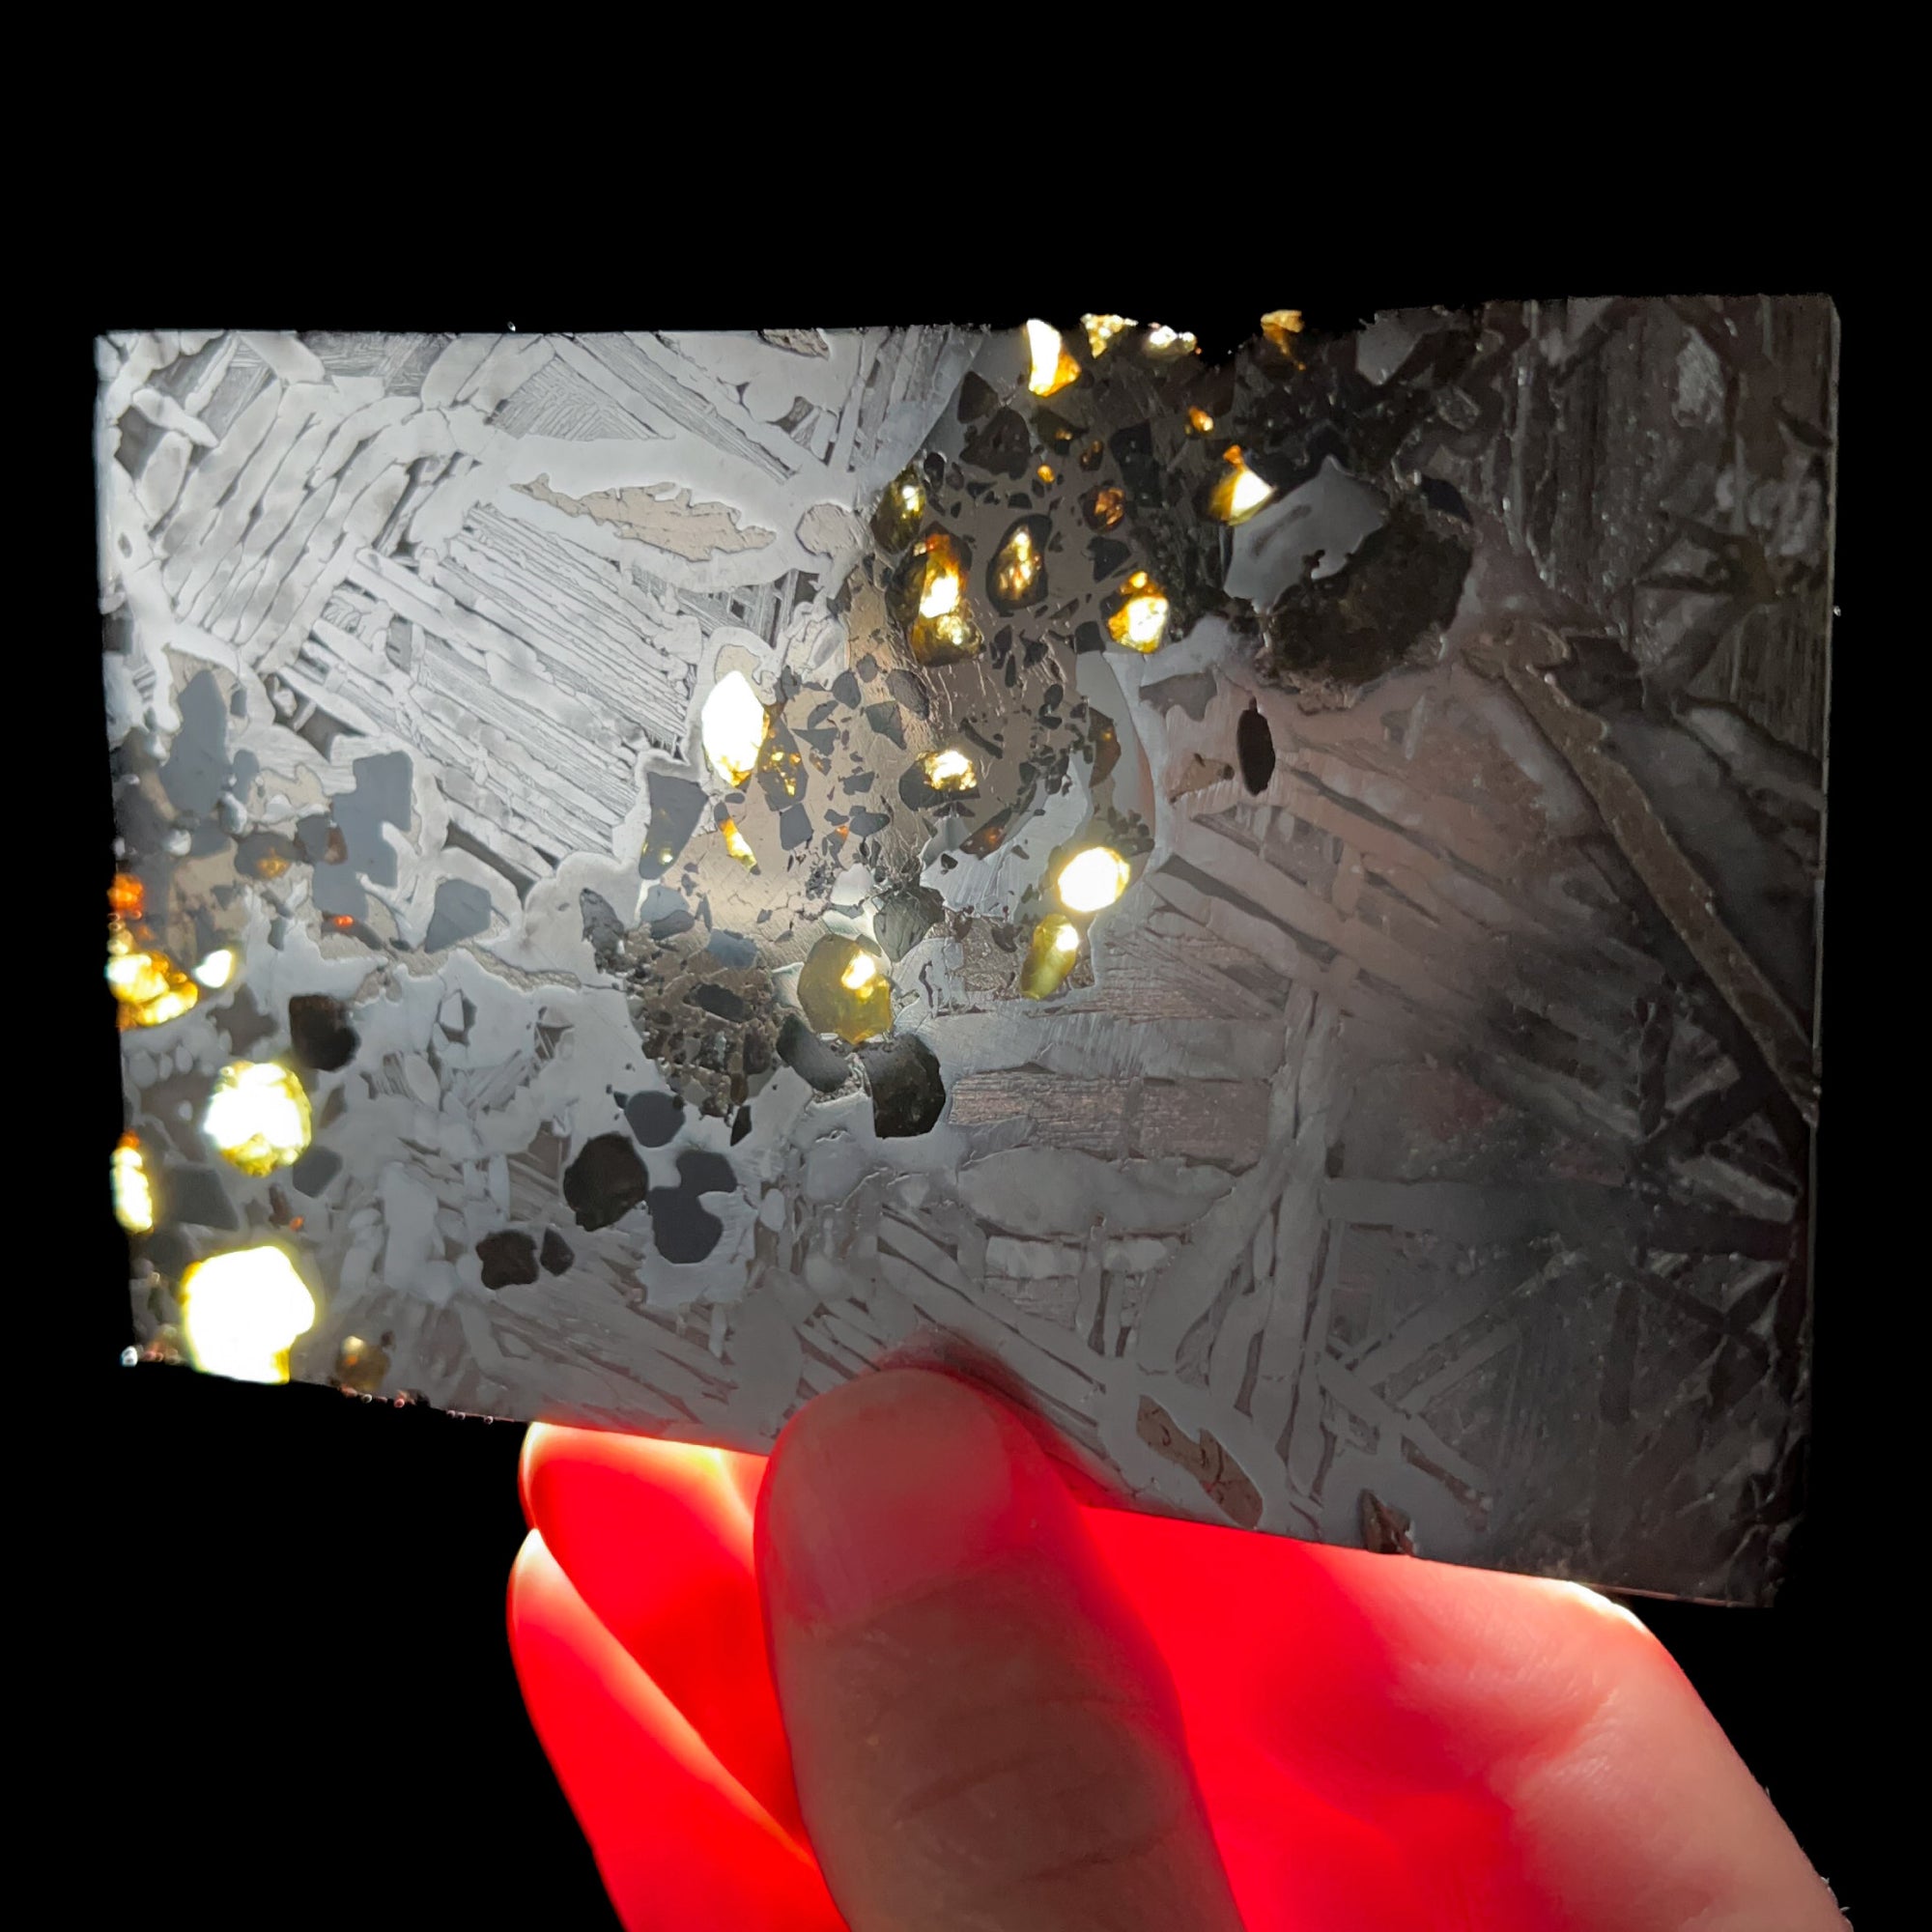 Large Seymchan Pallasite Meteorite Slice with Olivine Inclusions